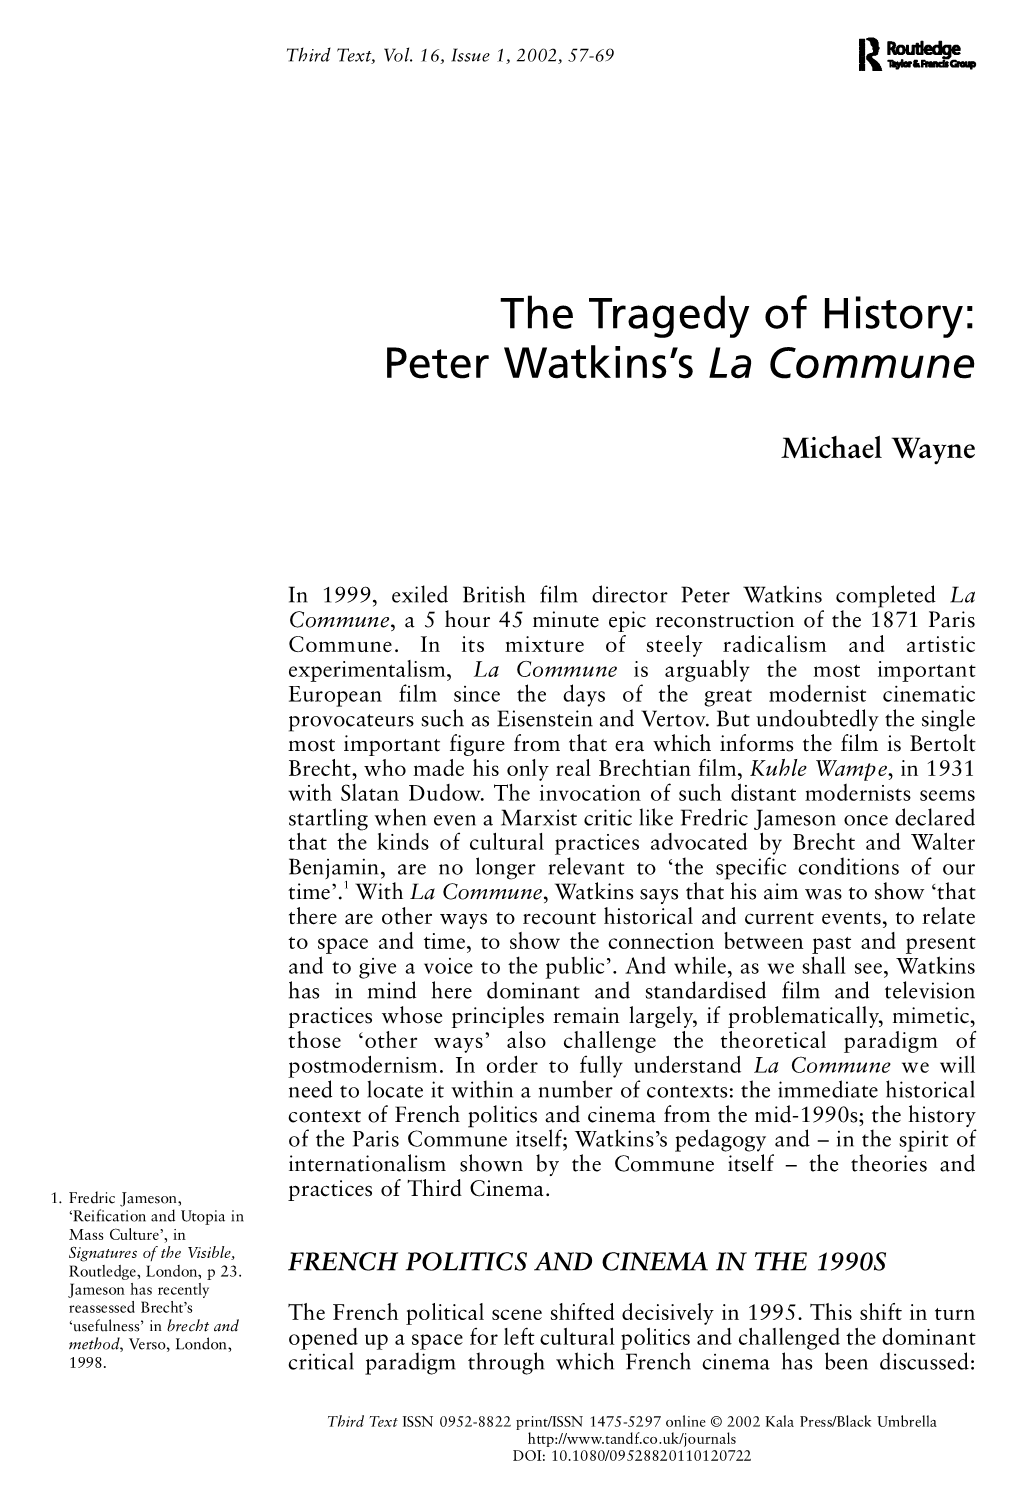 The Tragedy of History: Peter Watkins's 'La Commune'